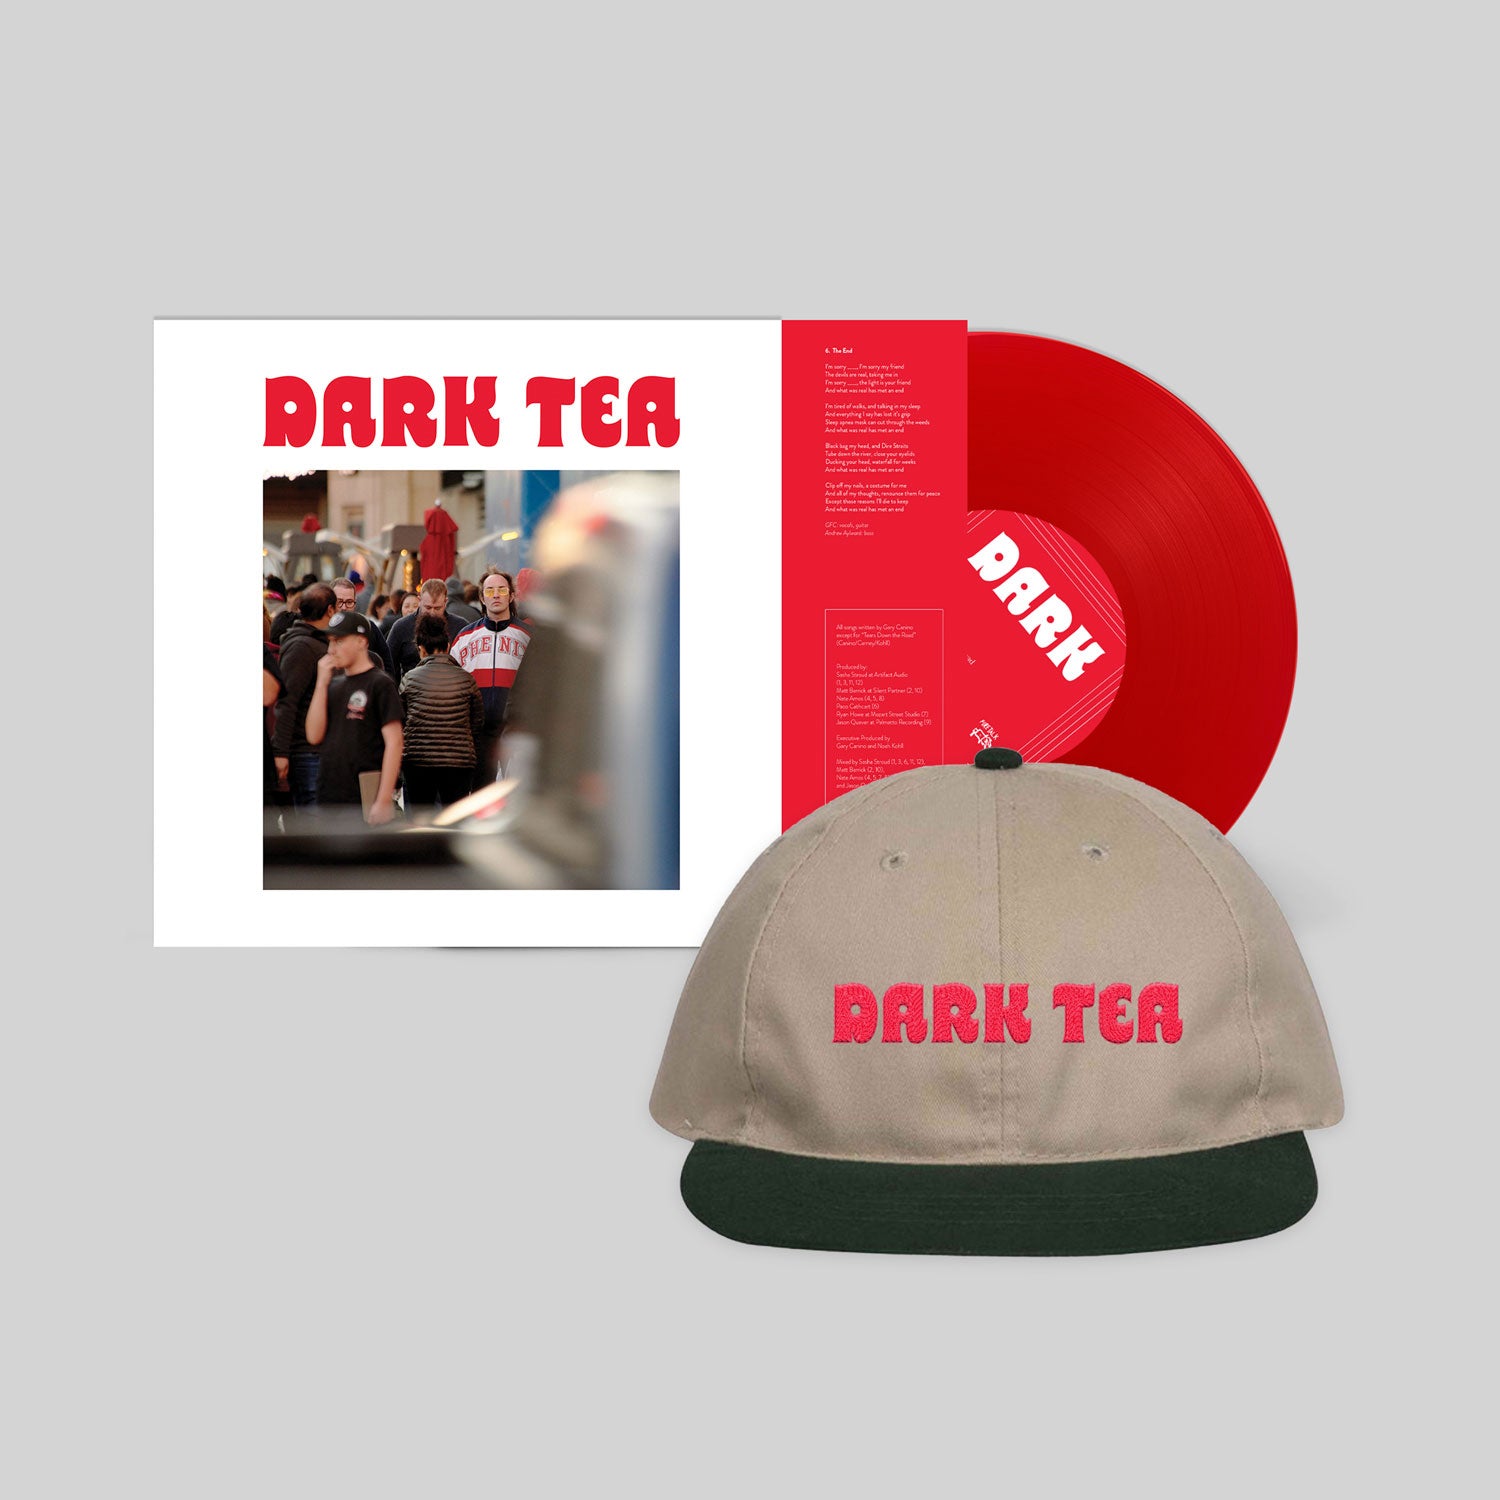 DARK TEA LP2 BRIGHT RED VINYL & HIGHWAY MILE HAT BUNDLE